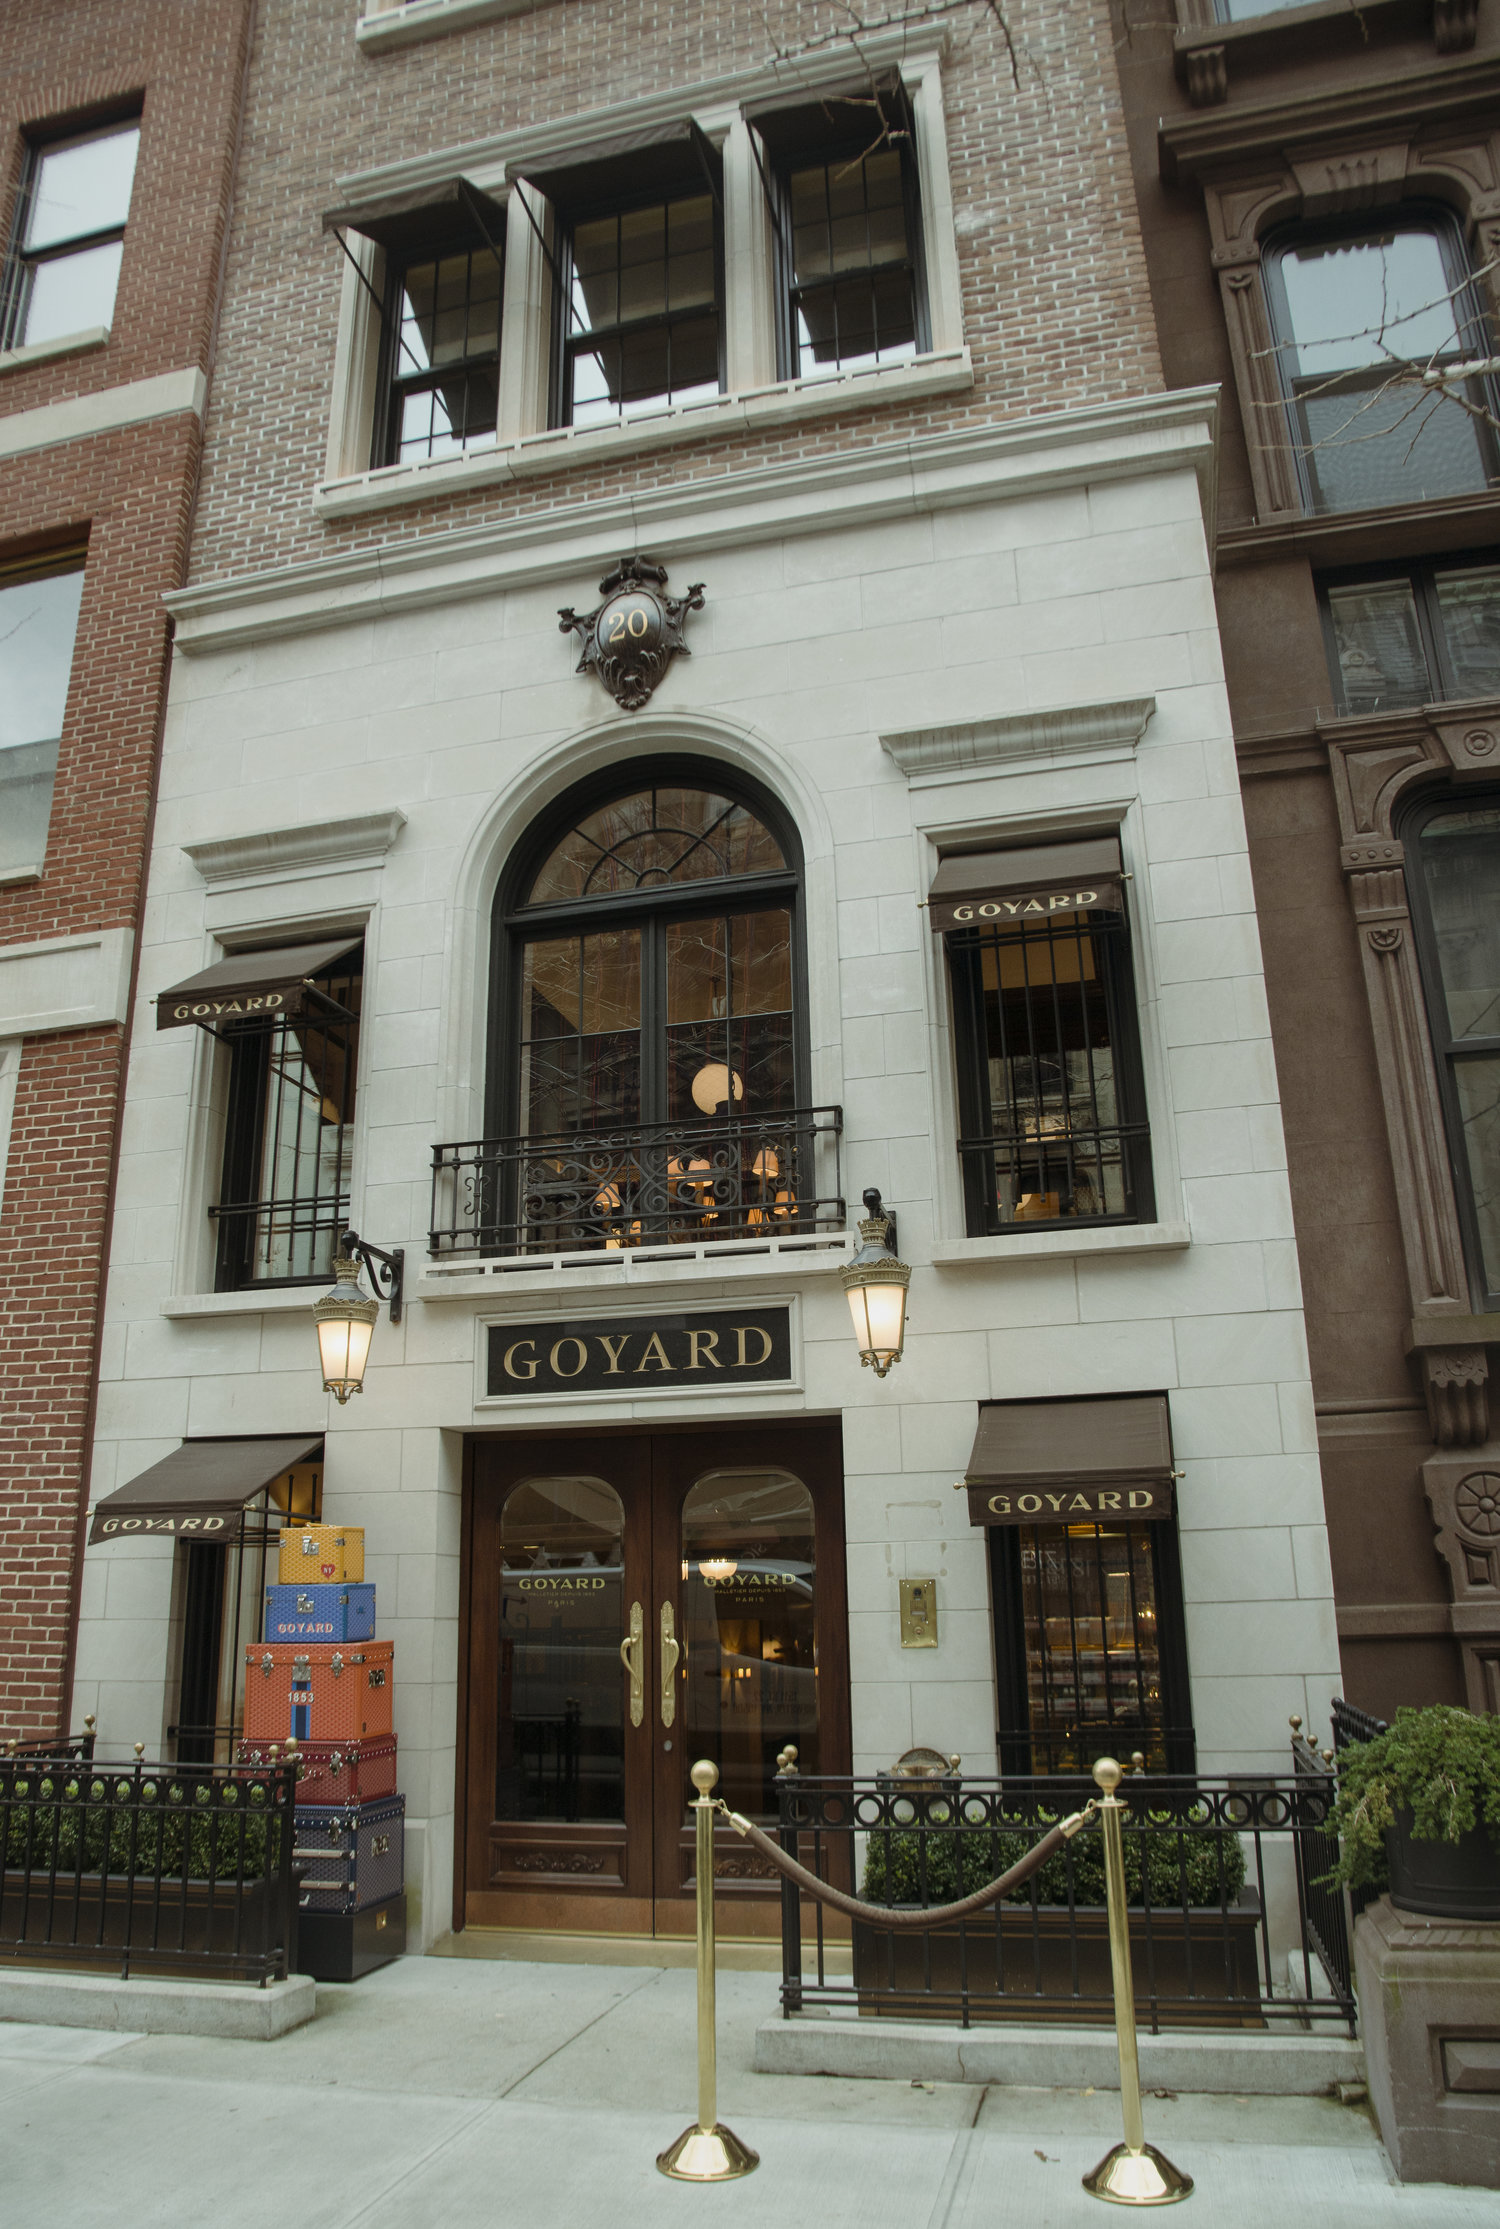 Historical Windows of New York - Goyard Image